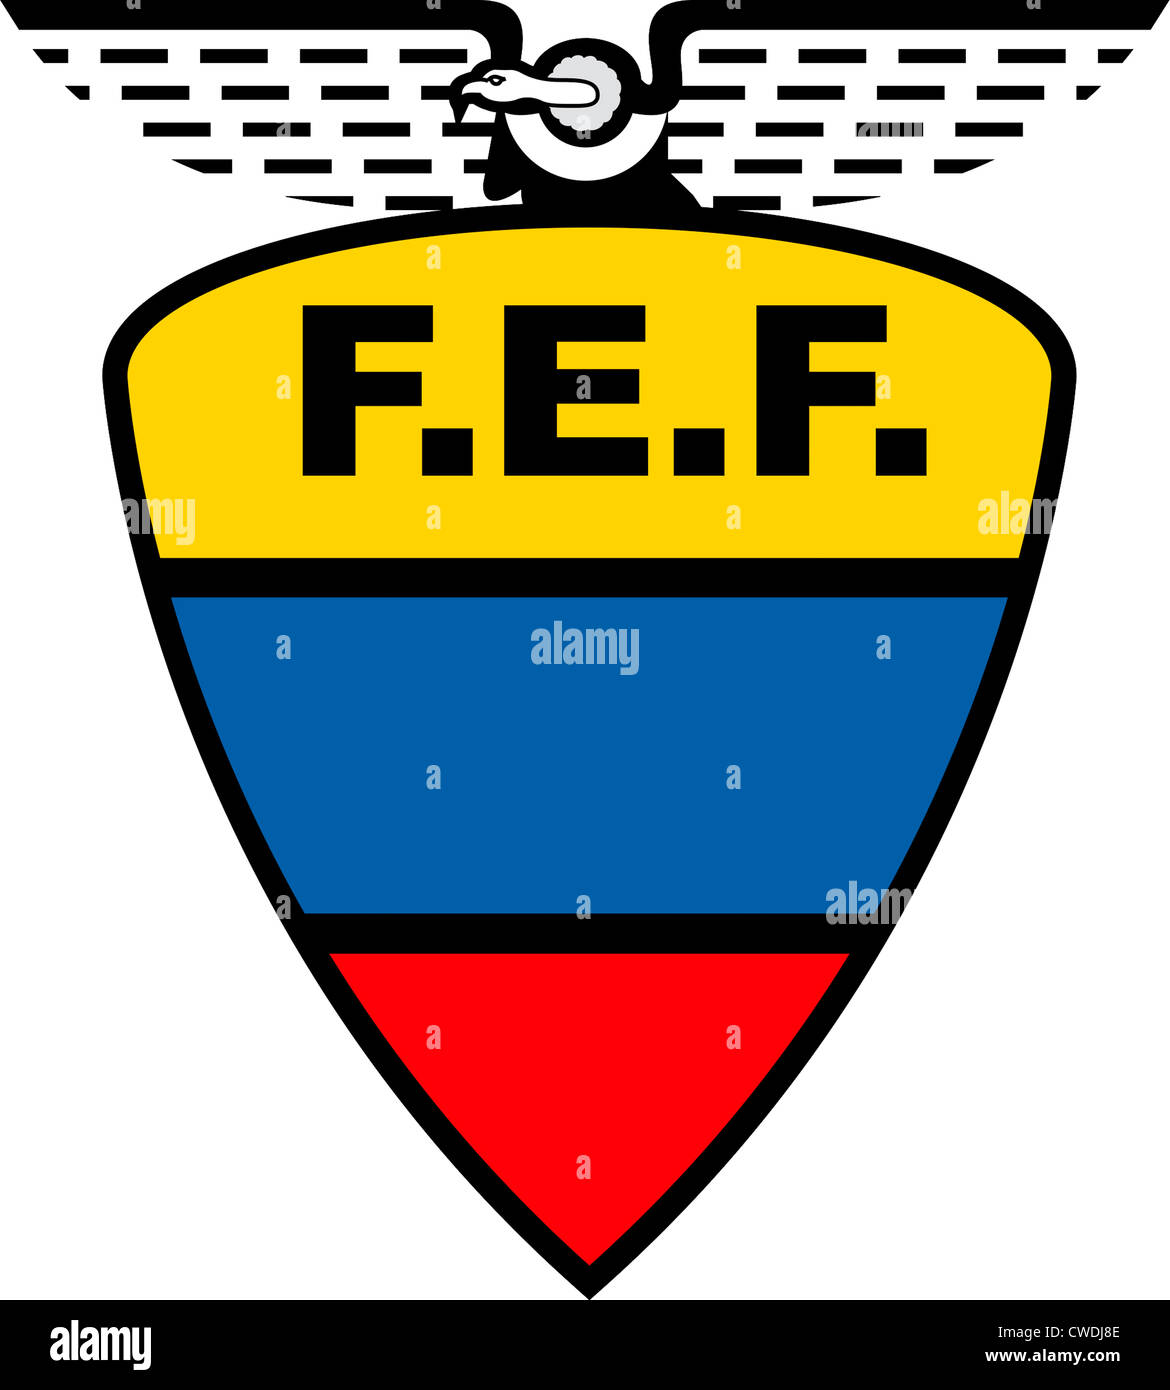 Logo of the National football team of Ecuador. Stock Photo